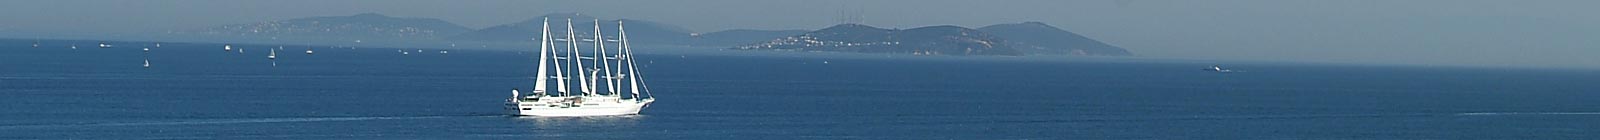 Still the Bosporus sailing yacht Banner